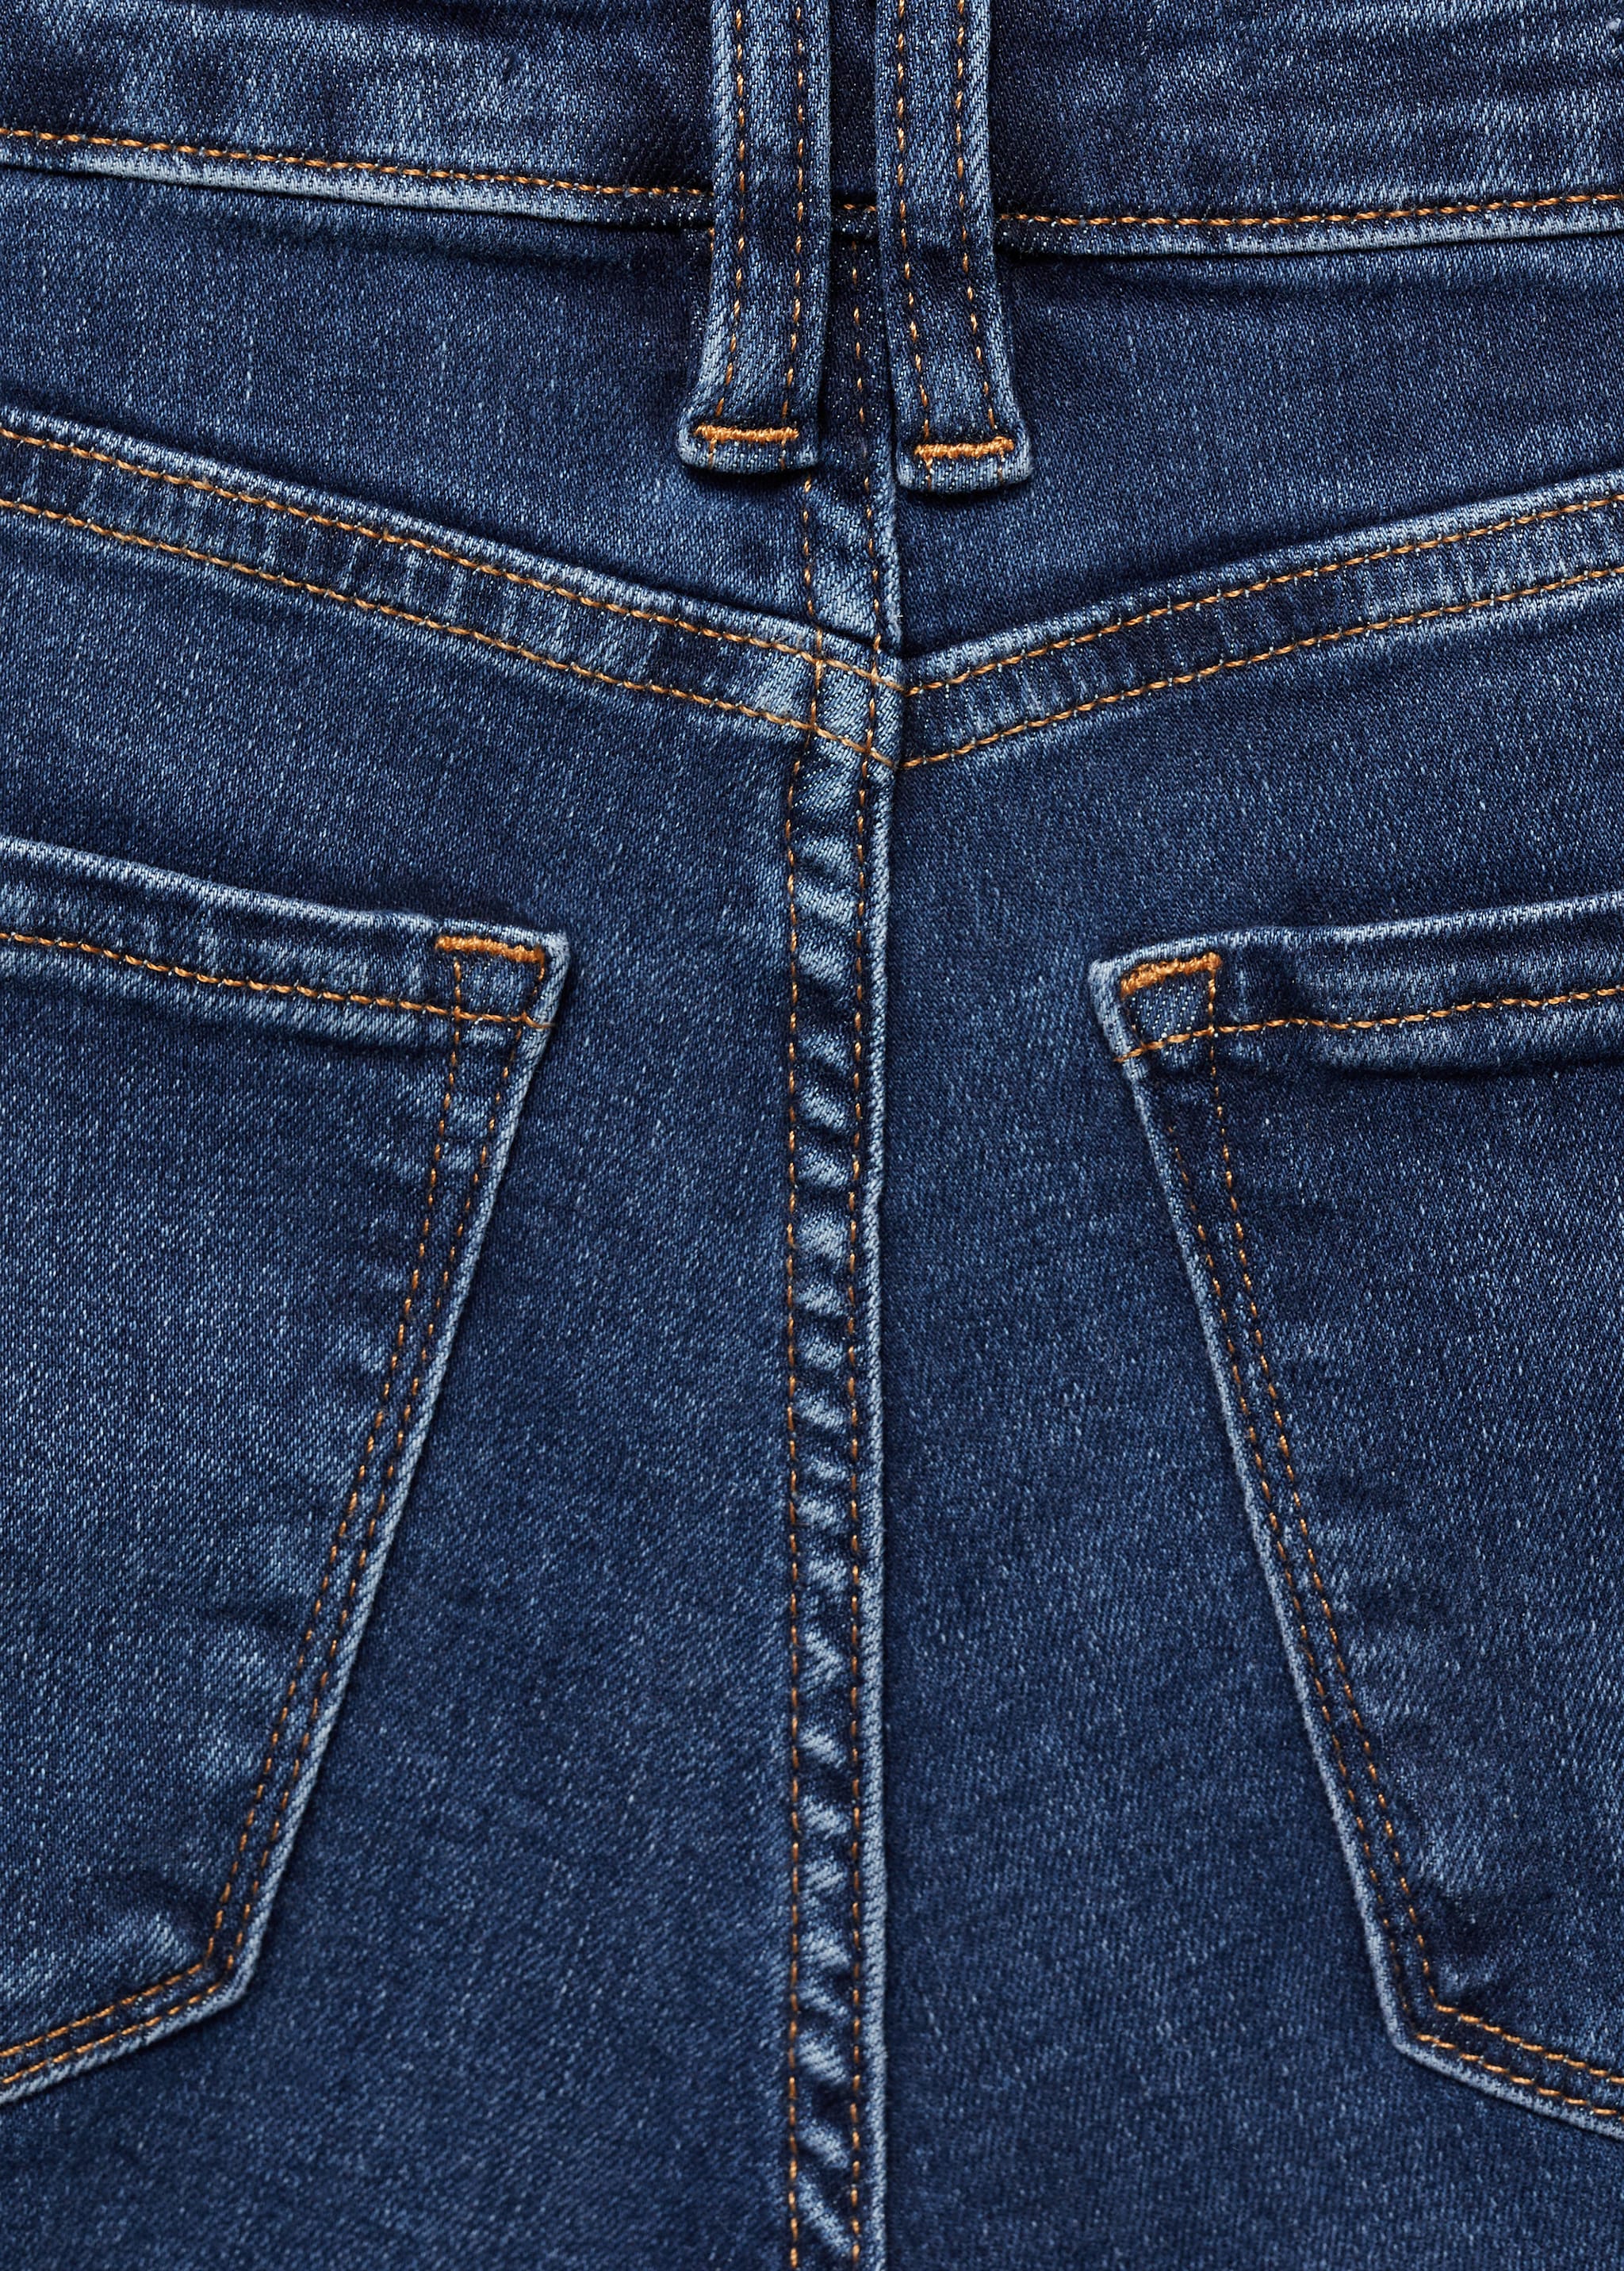 Capri slim-fit jeans - Details of the article 0